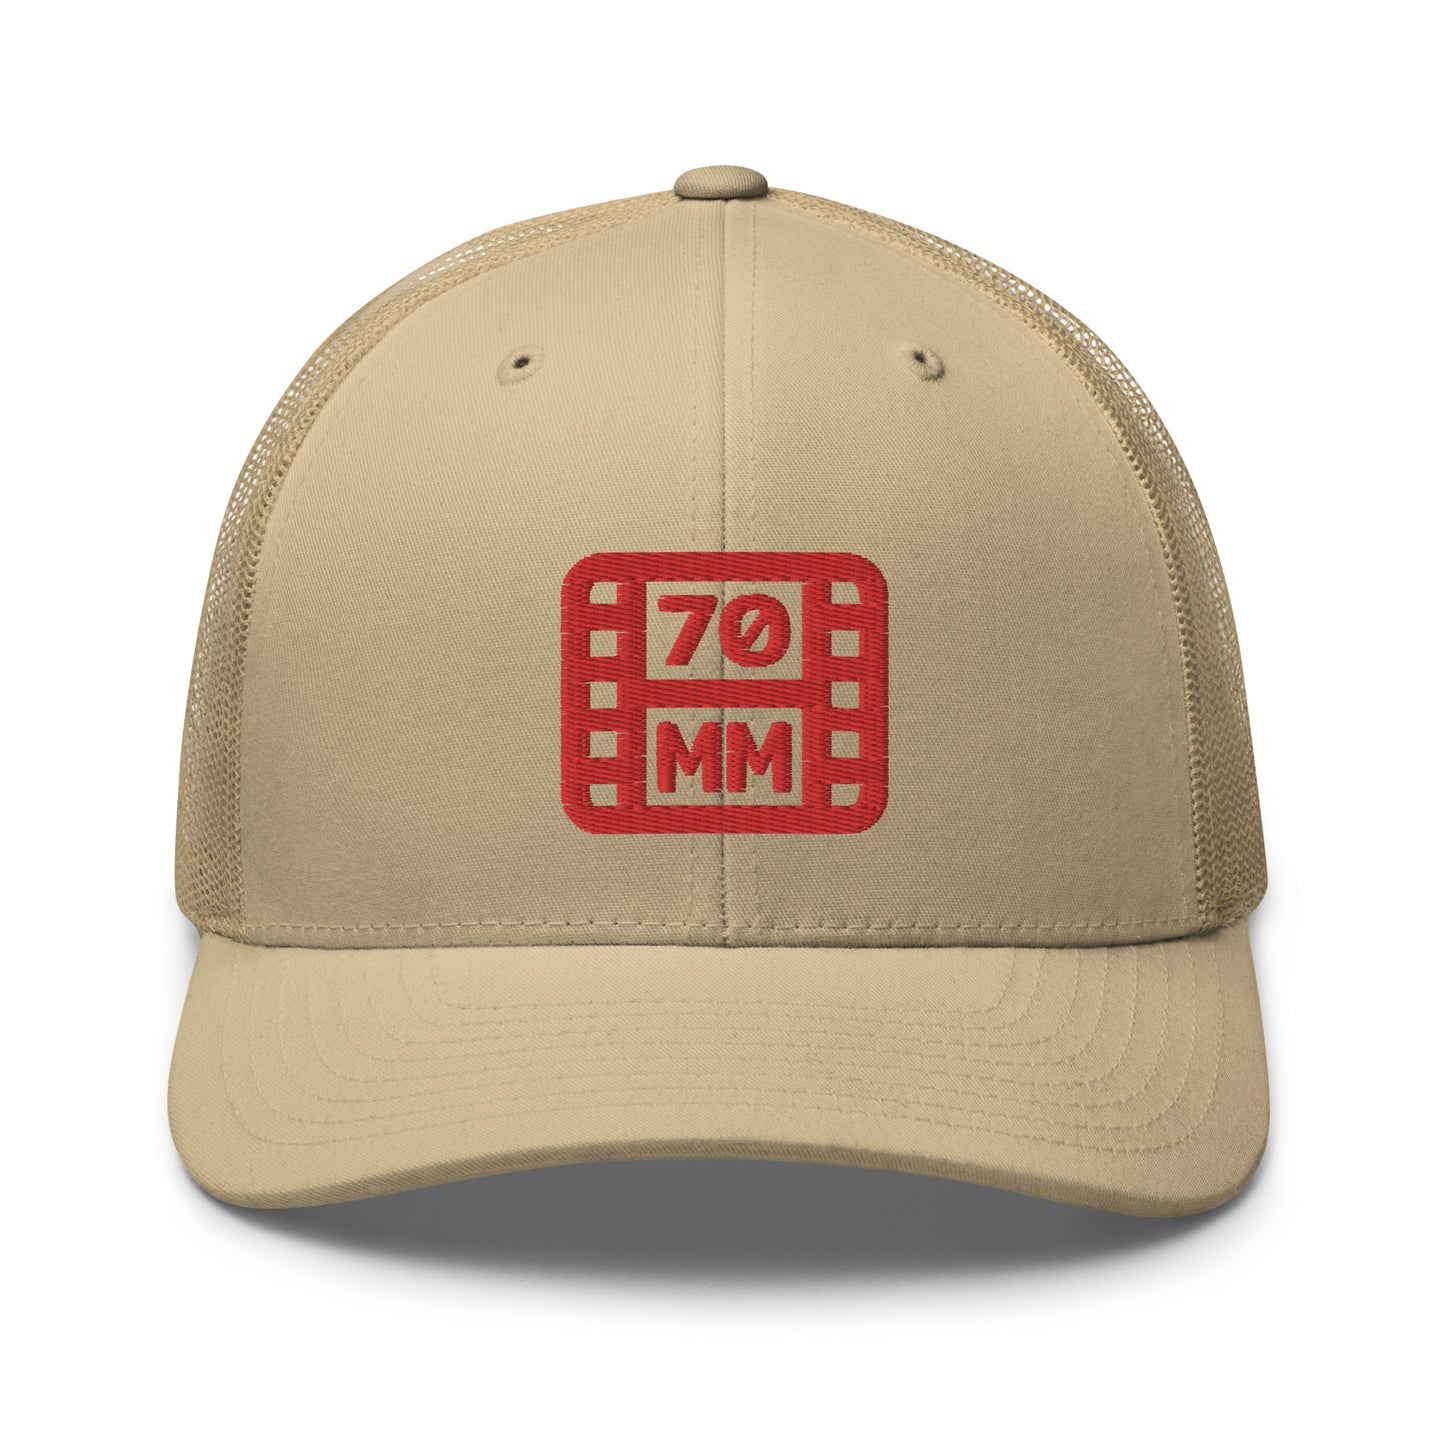 70mm Logo Trucker Cap